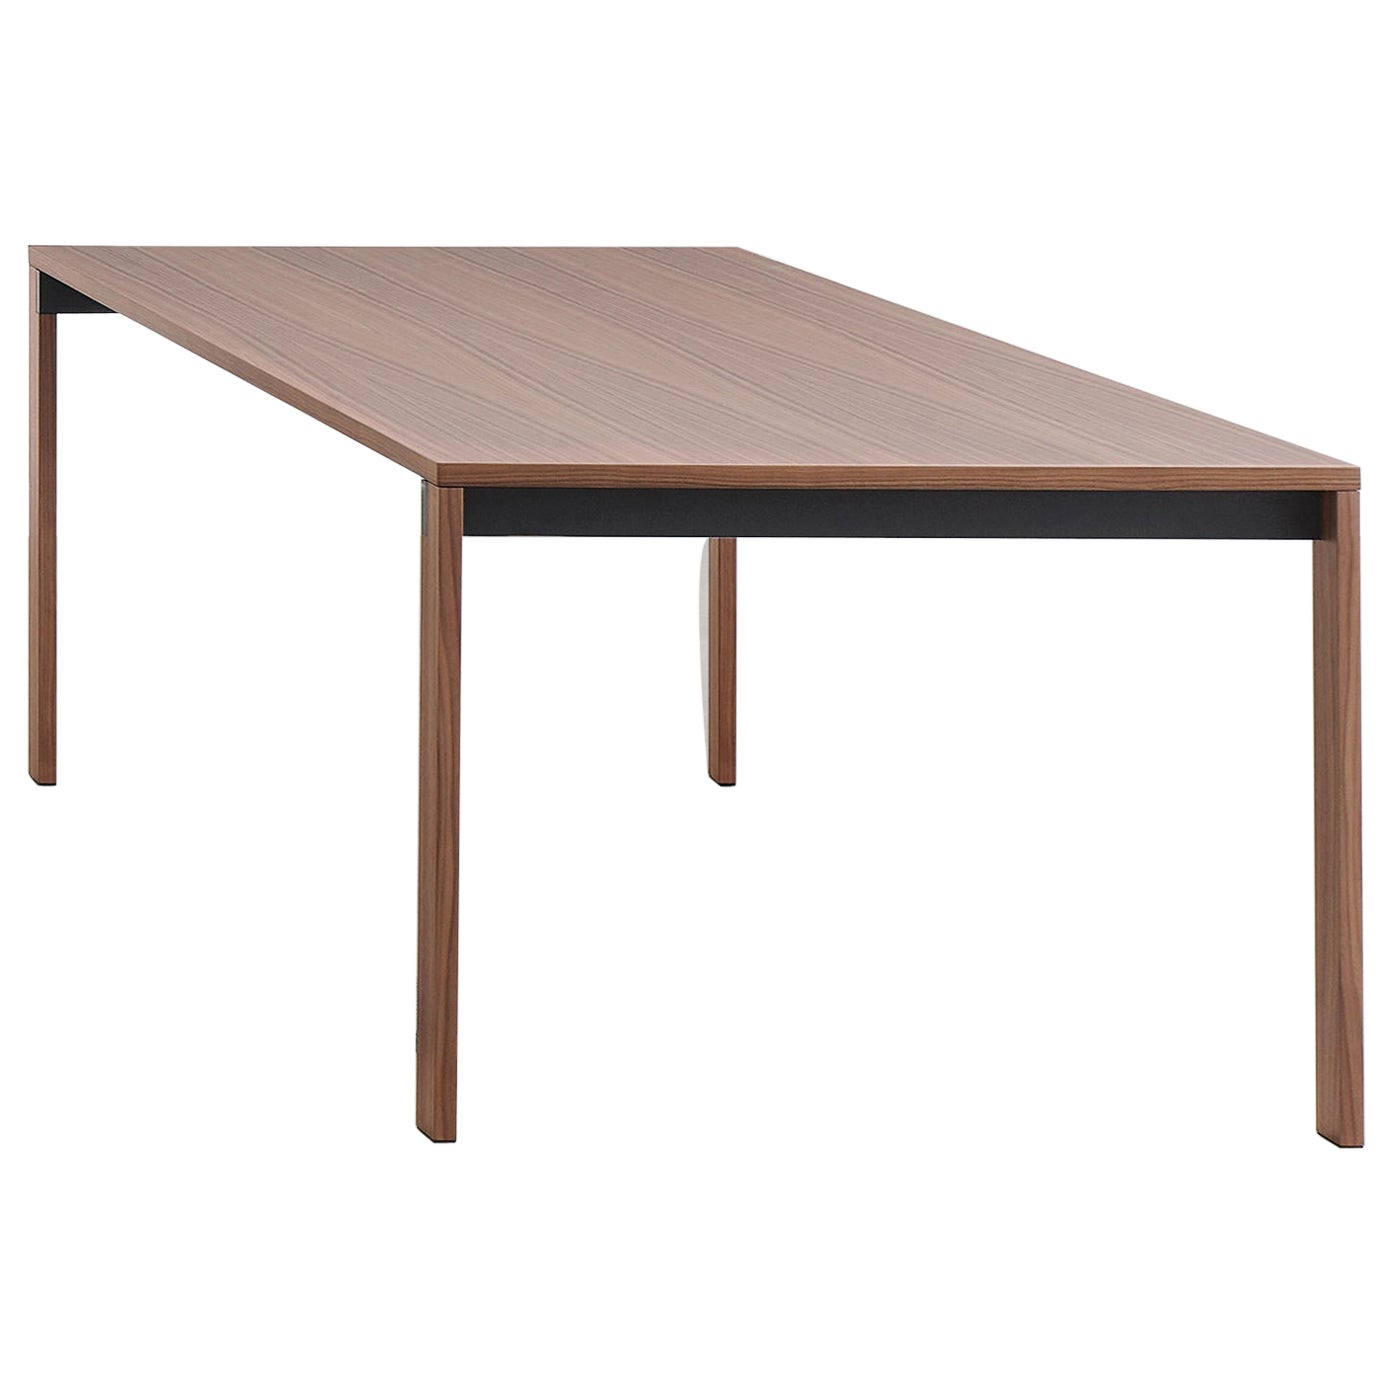 Desalto Beam Extendible Table Designed by Mario Ferrarini in Stock